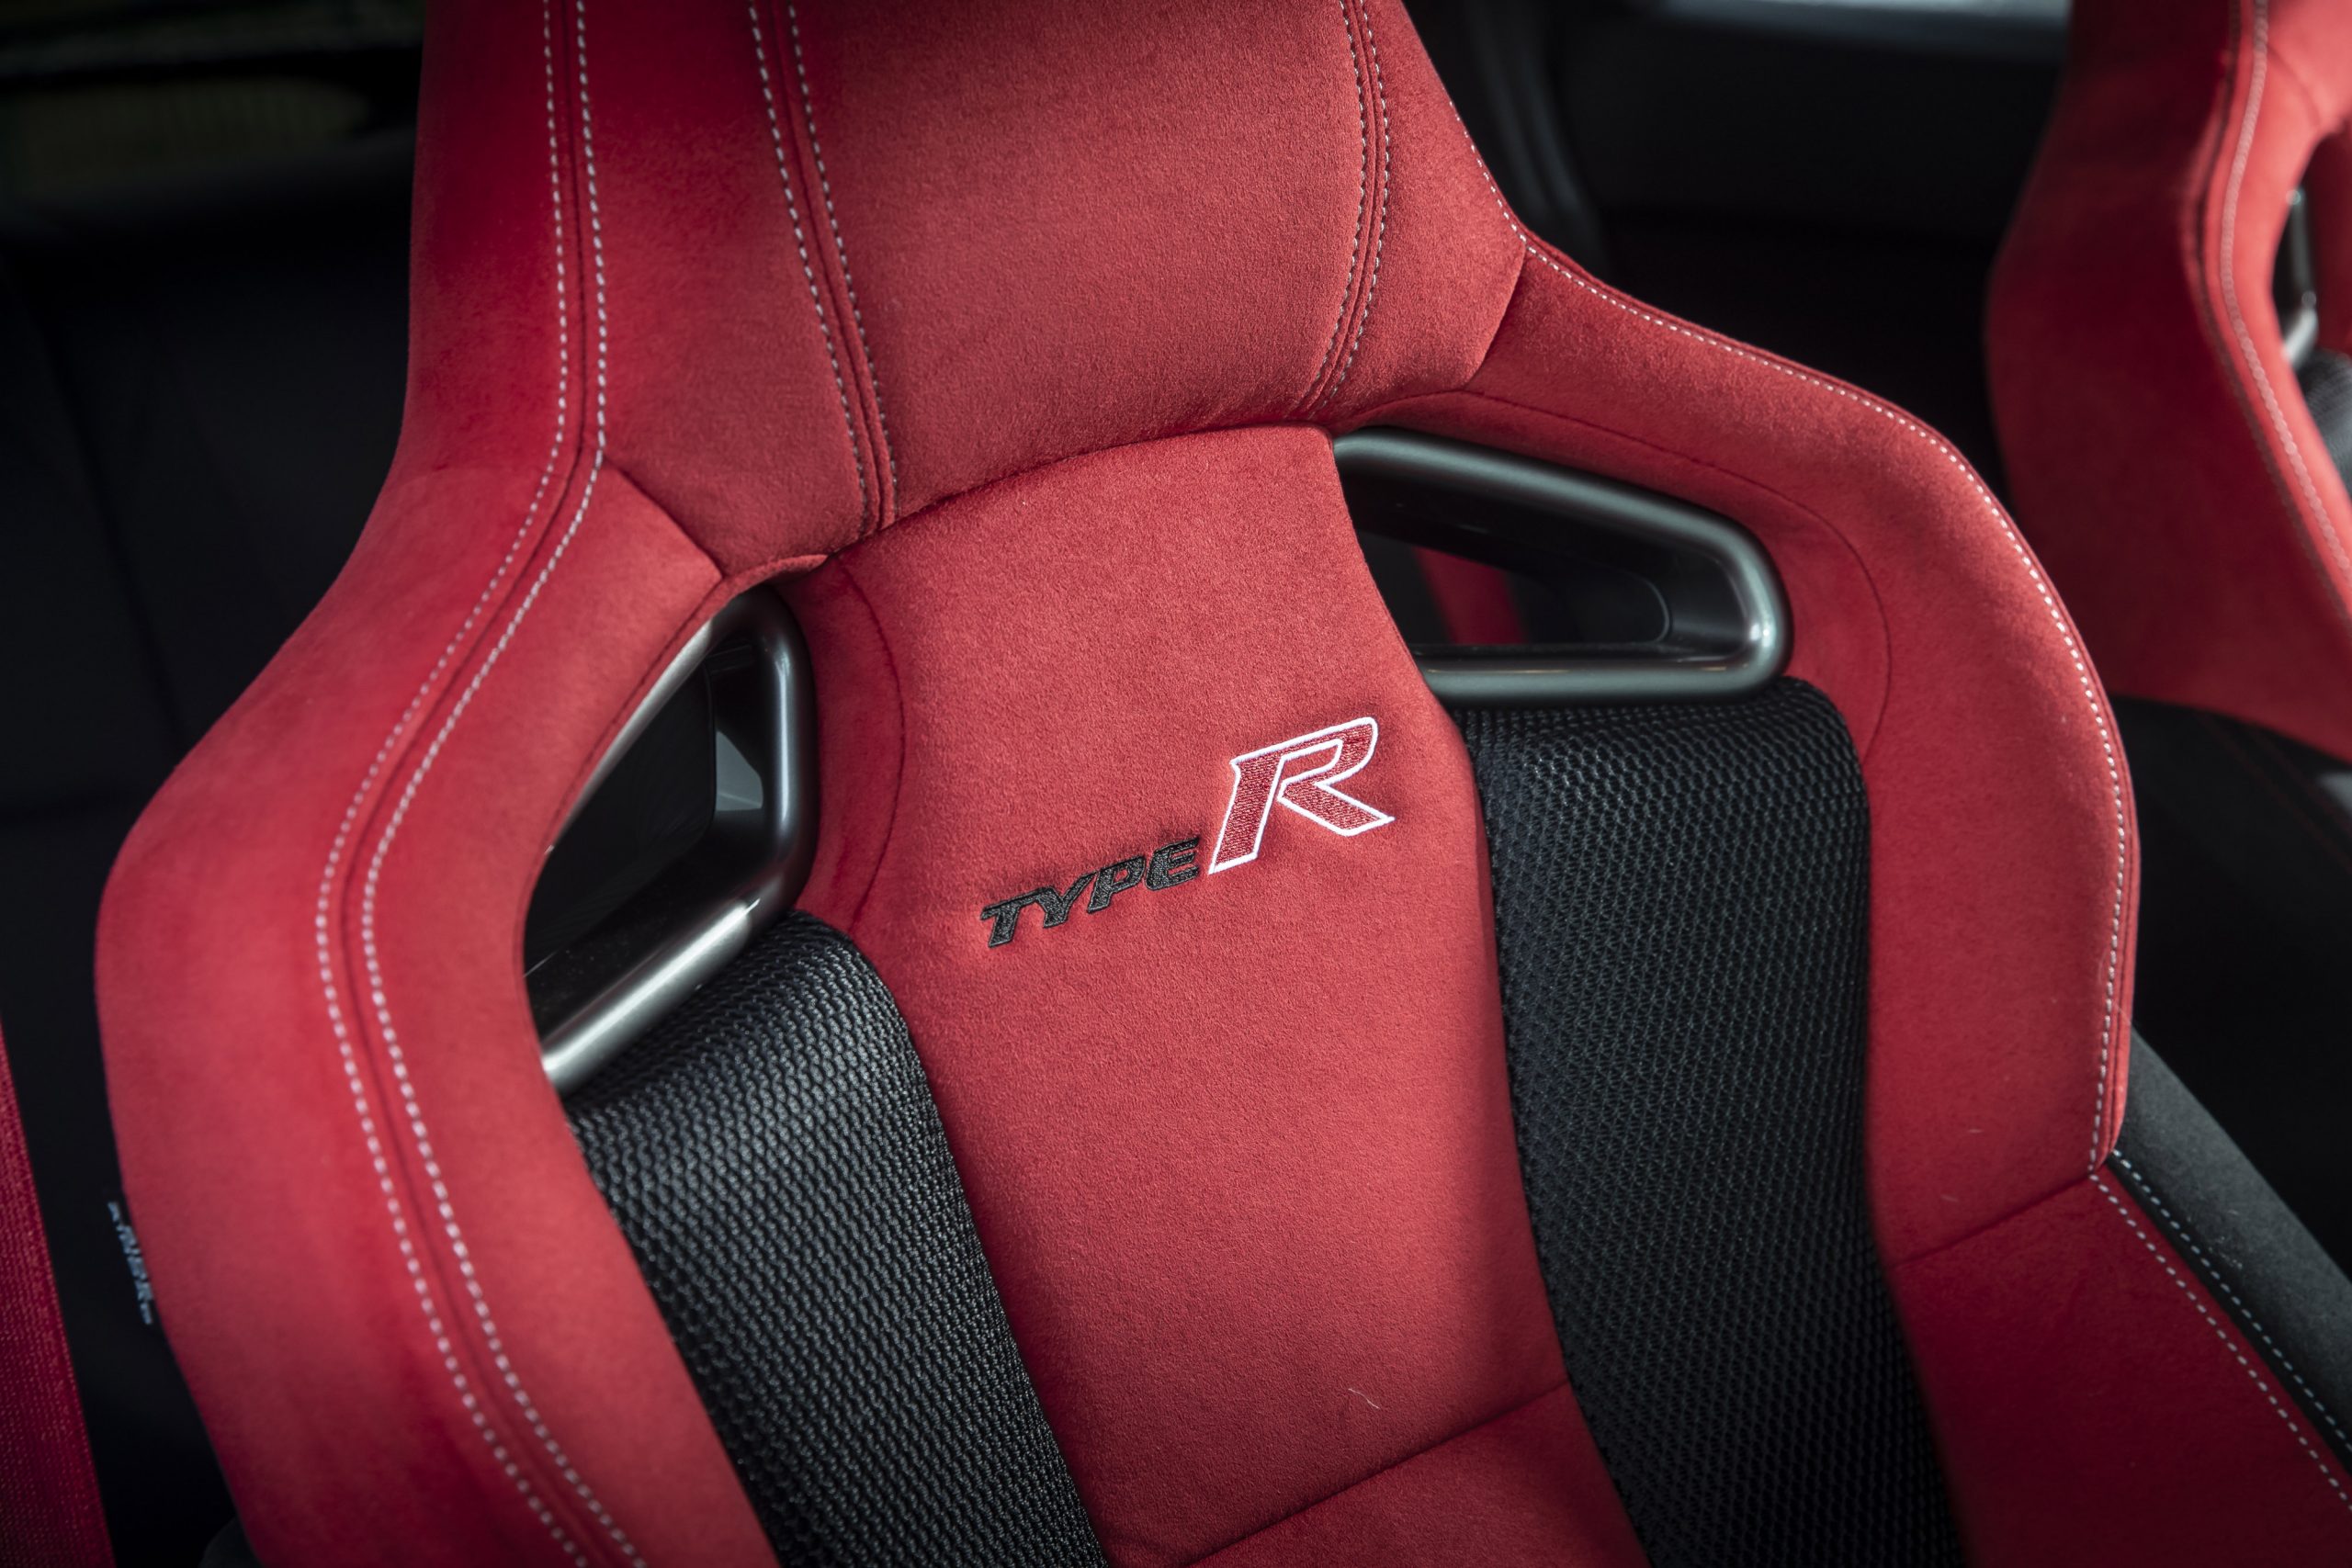 Honda Civic Type-R seats